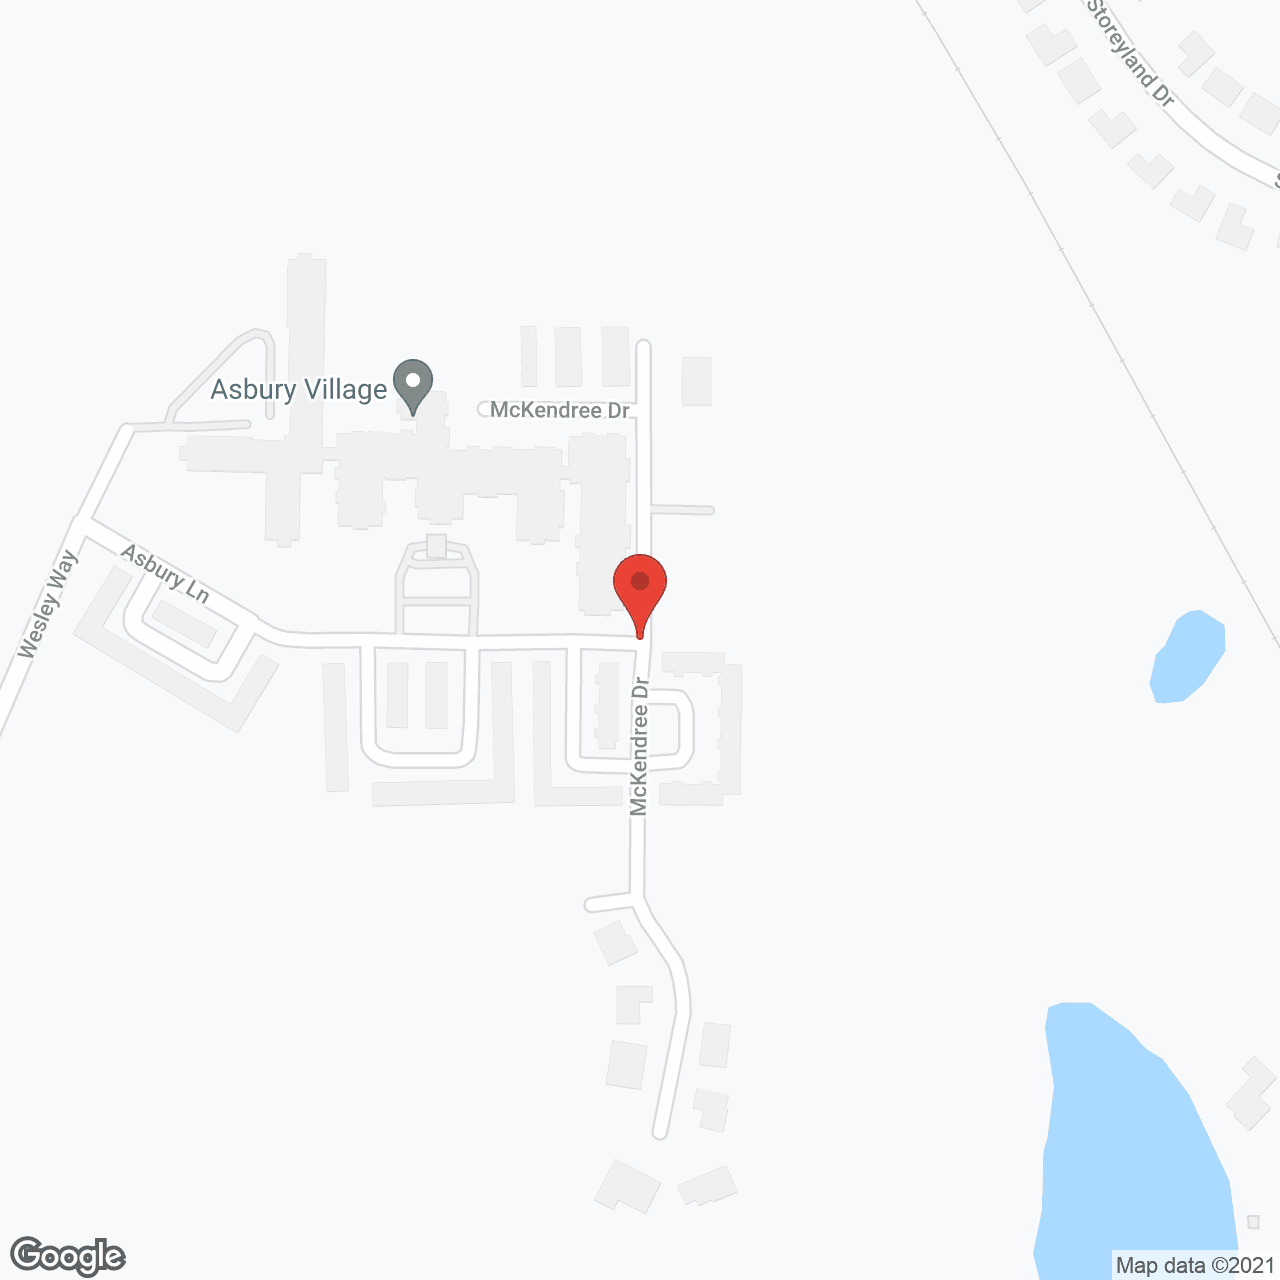 Asbury Village in google map